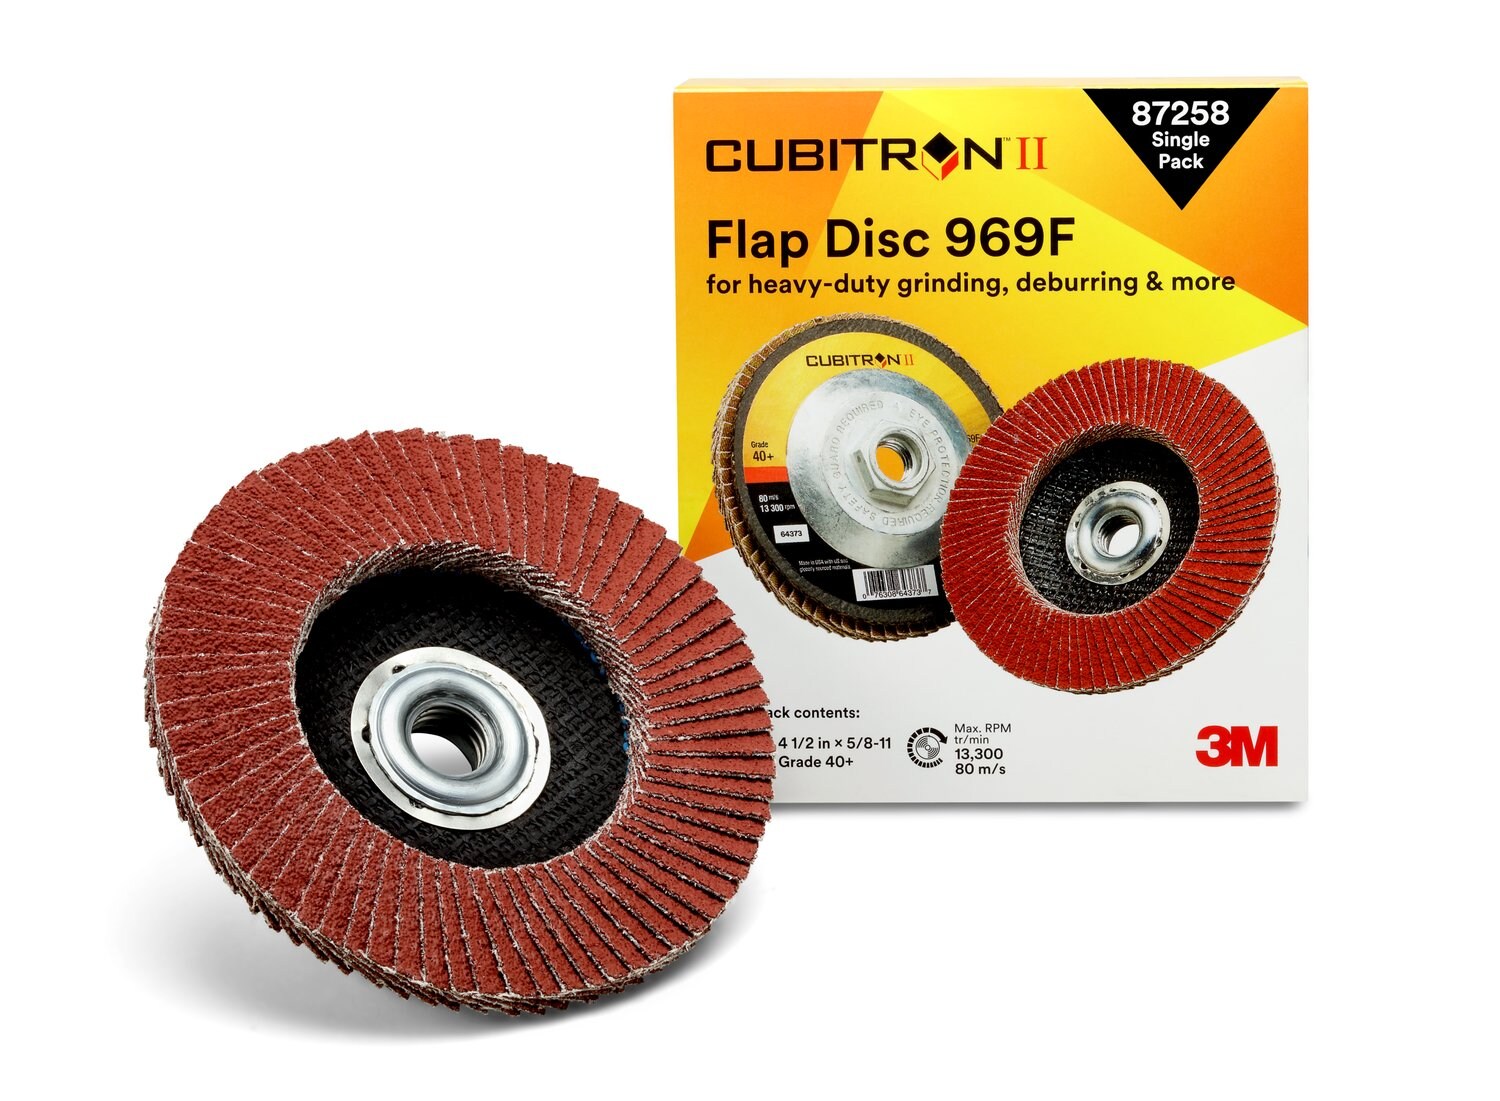 7100109866 - 3M Cubitron II Flap Disc 969F, 40+, T27 Quick Change, 4-1/2 in x
5/8"-11, 10 ea/Case, Single Pack